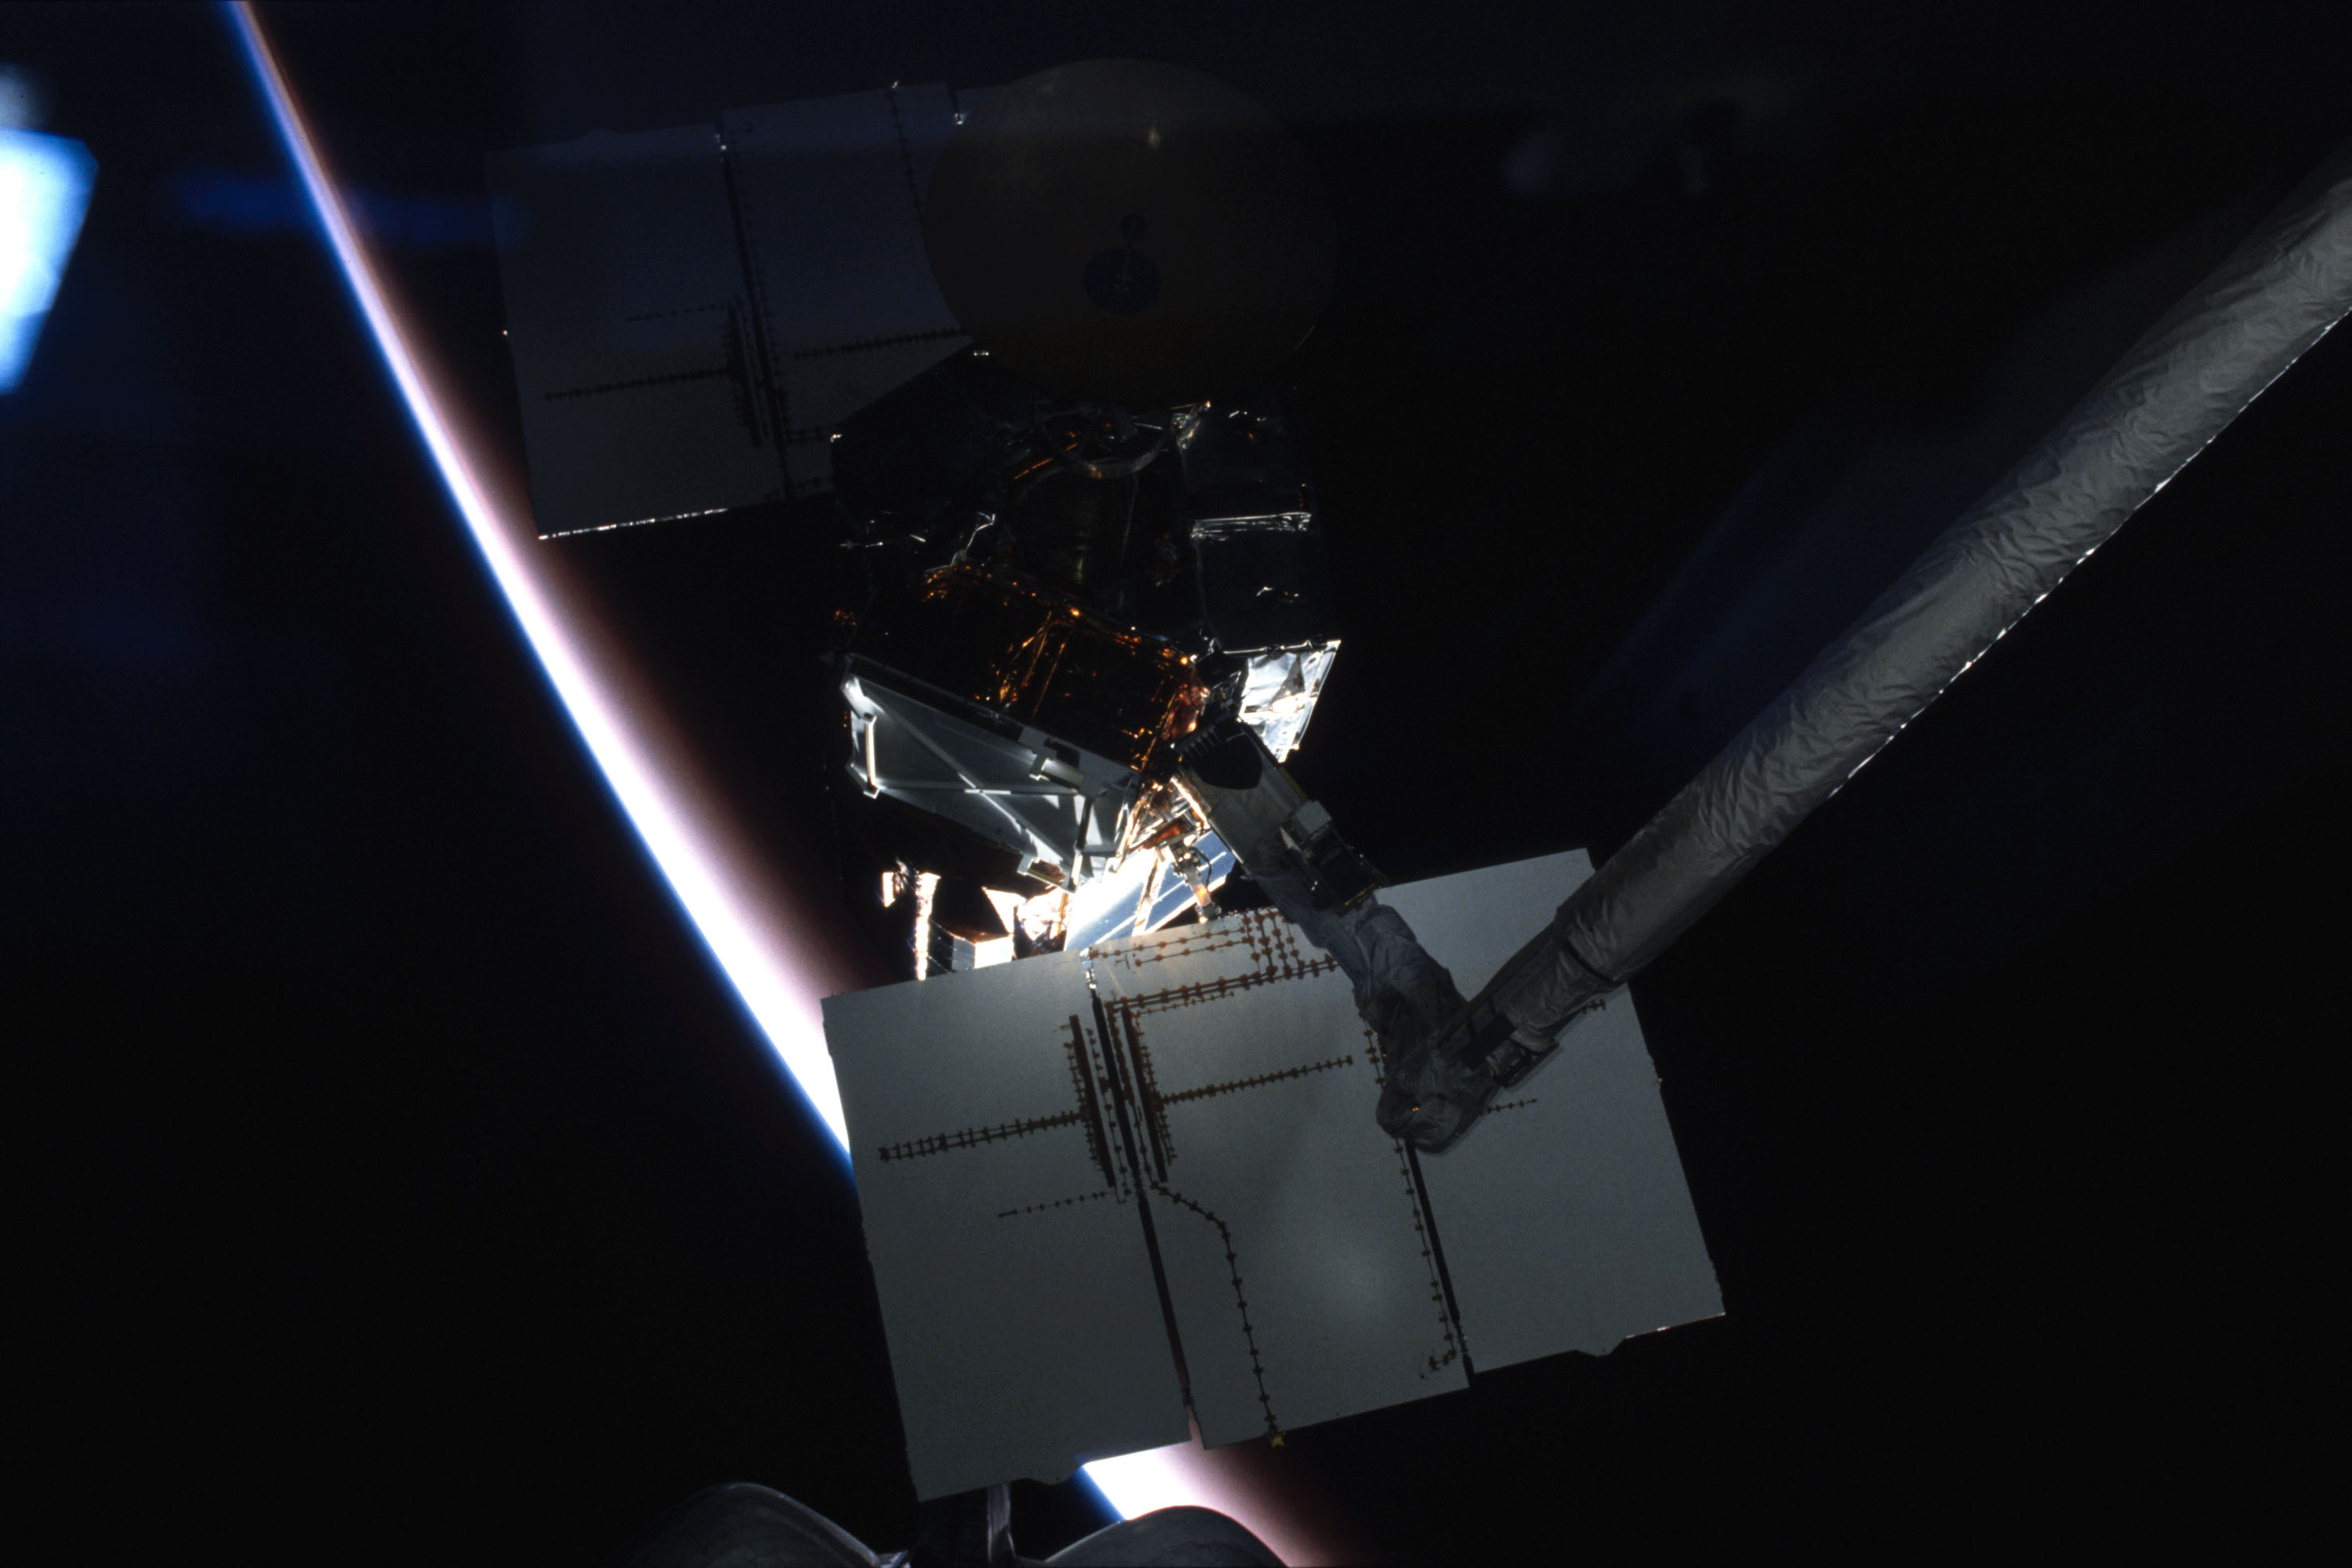 Terry J. Hart grapples Solar Max during orbital night